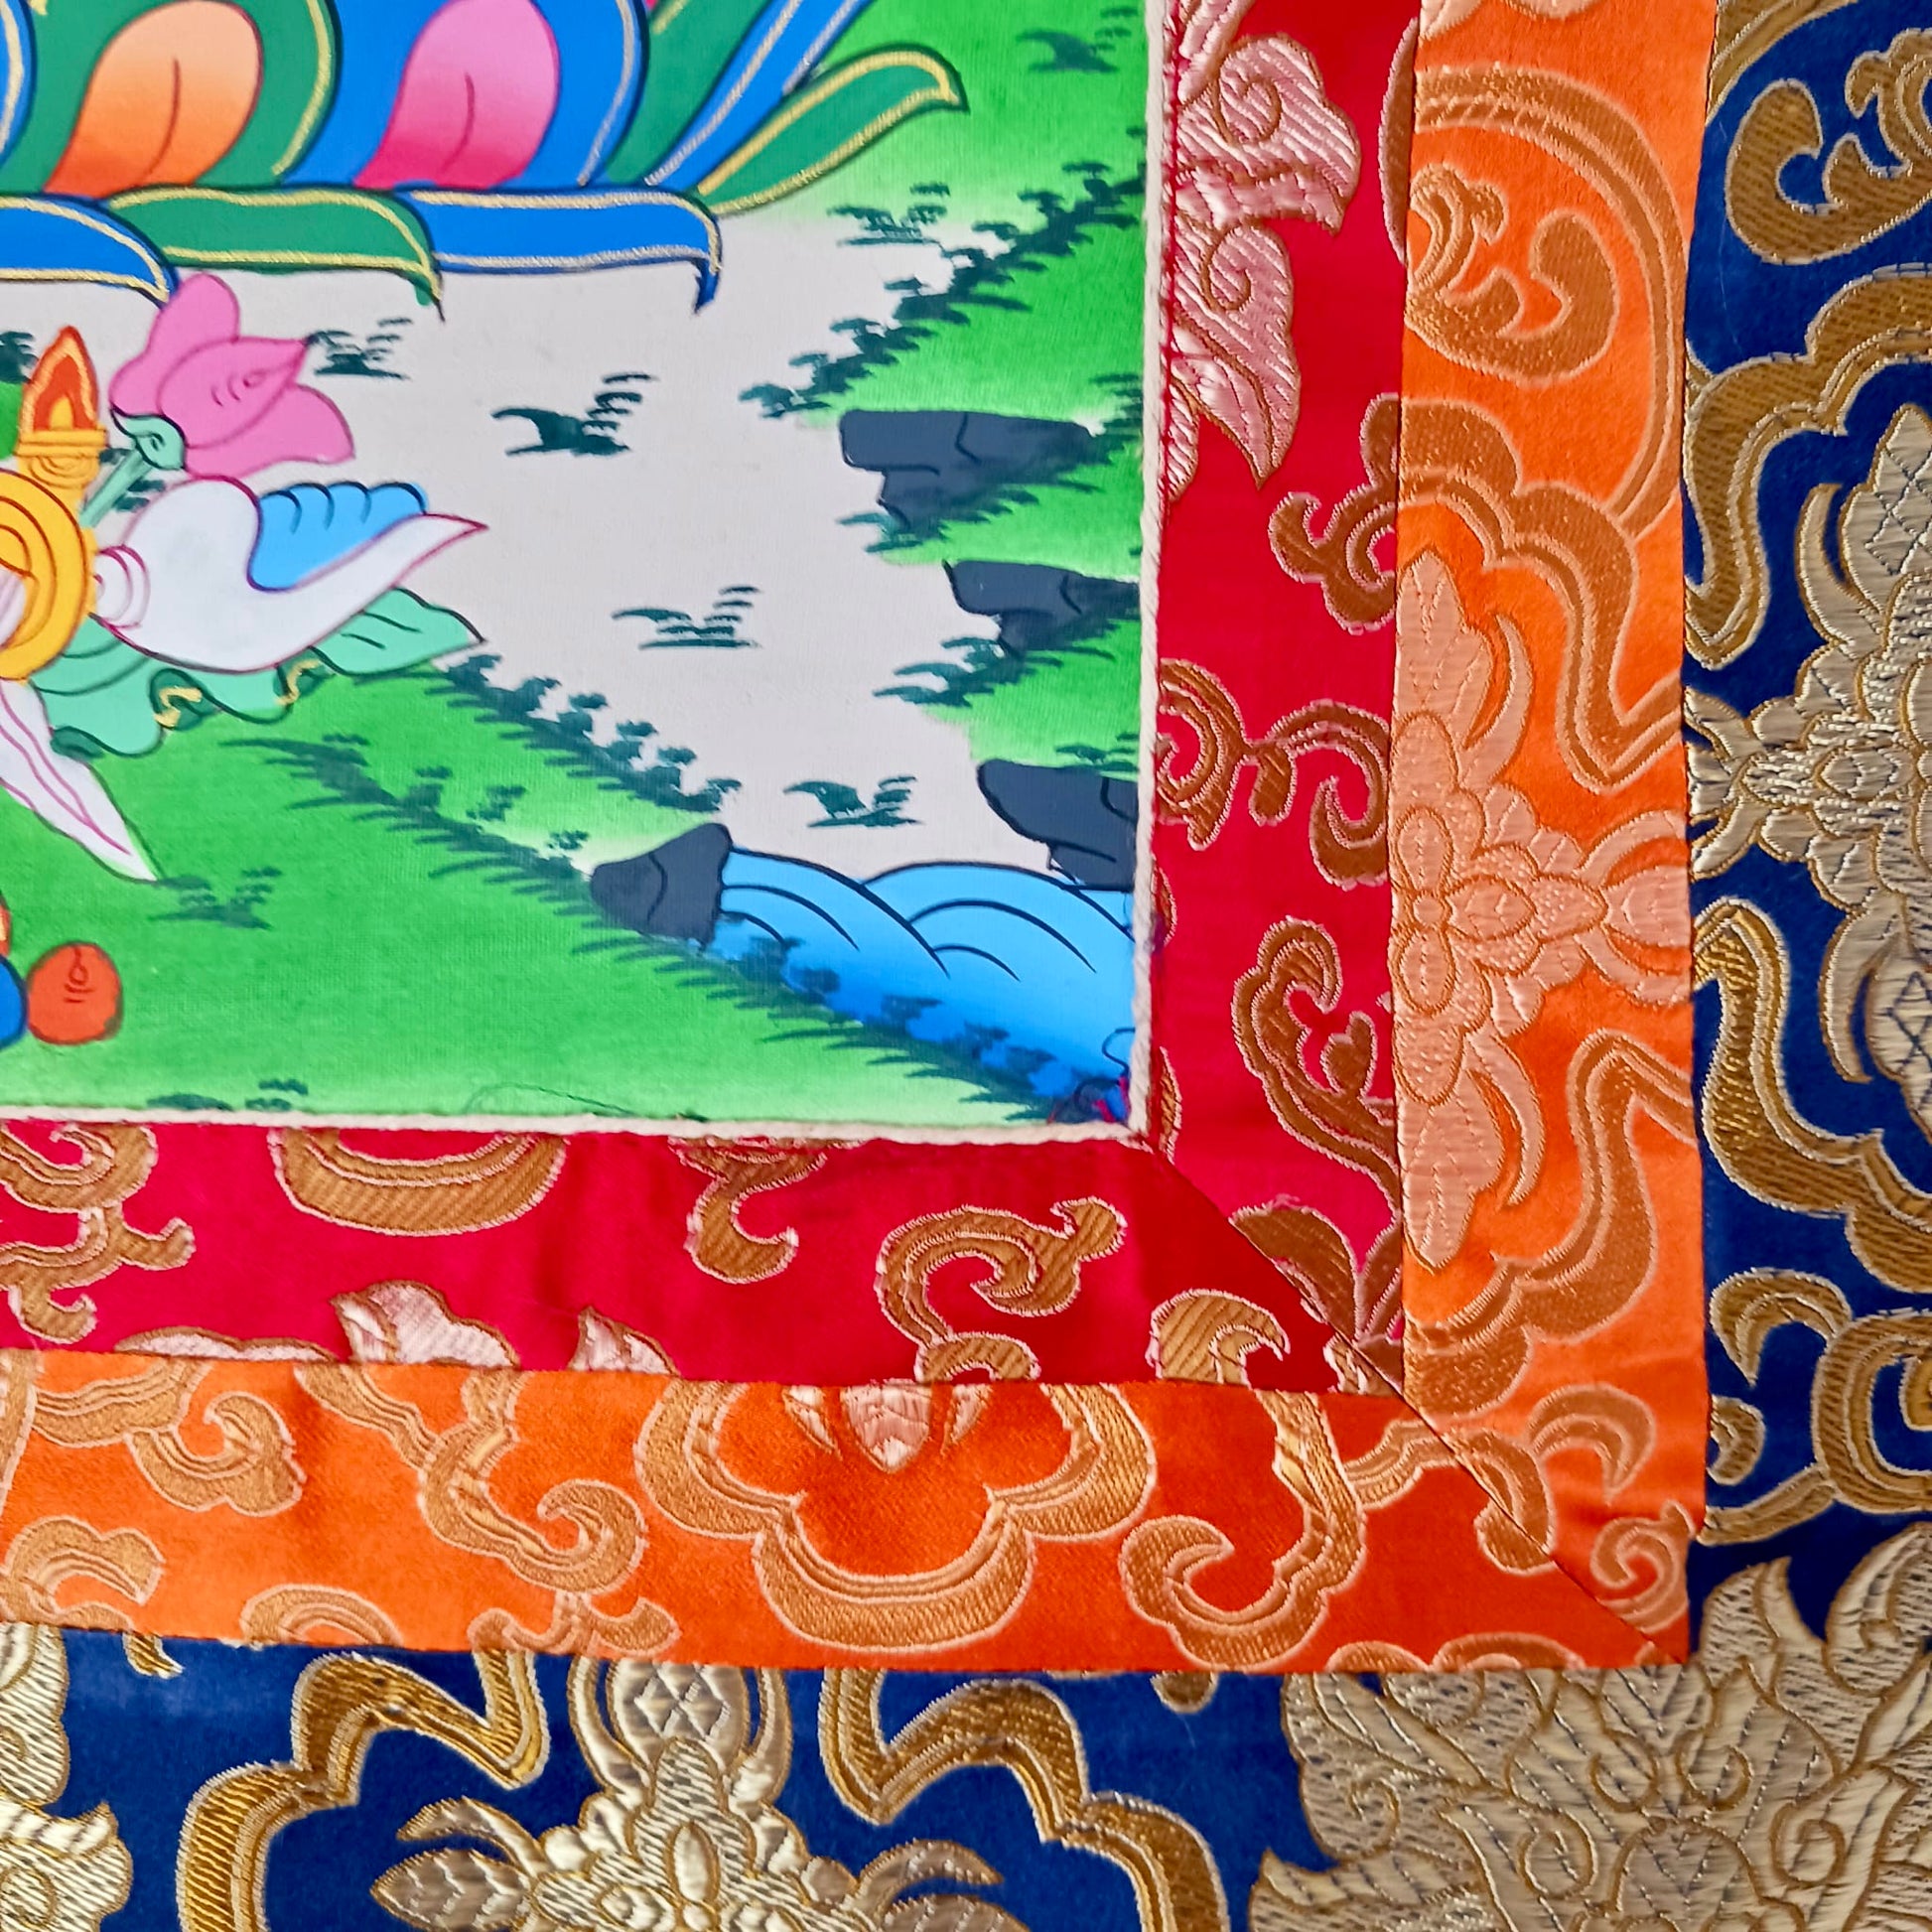 Chenrezig Art Thangka Painting | 82cm x 53cm